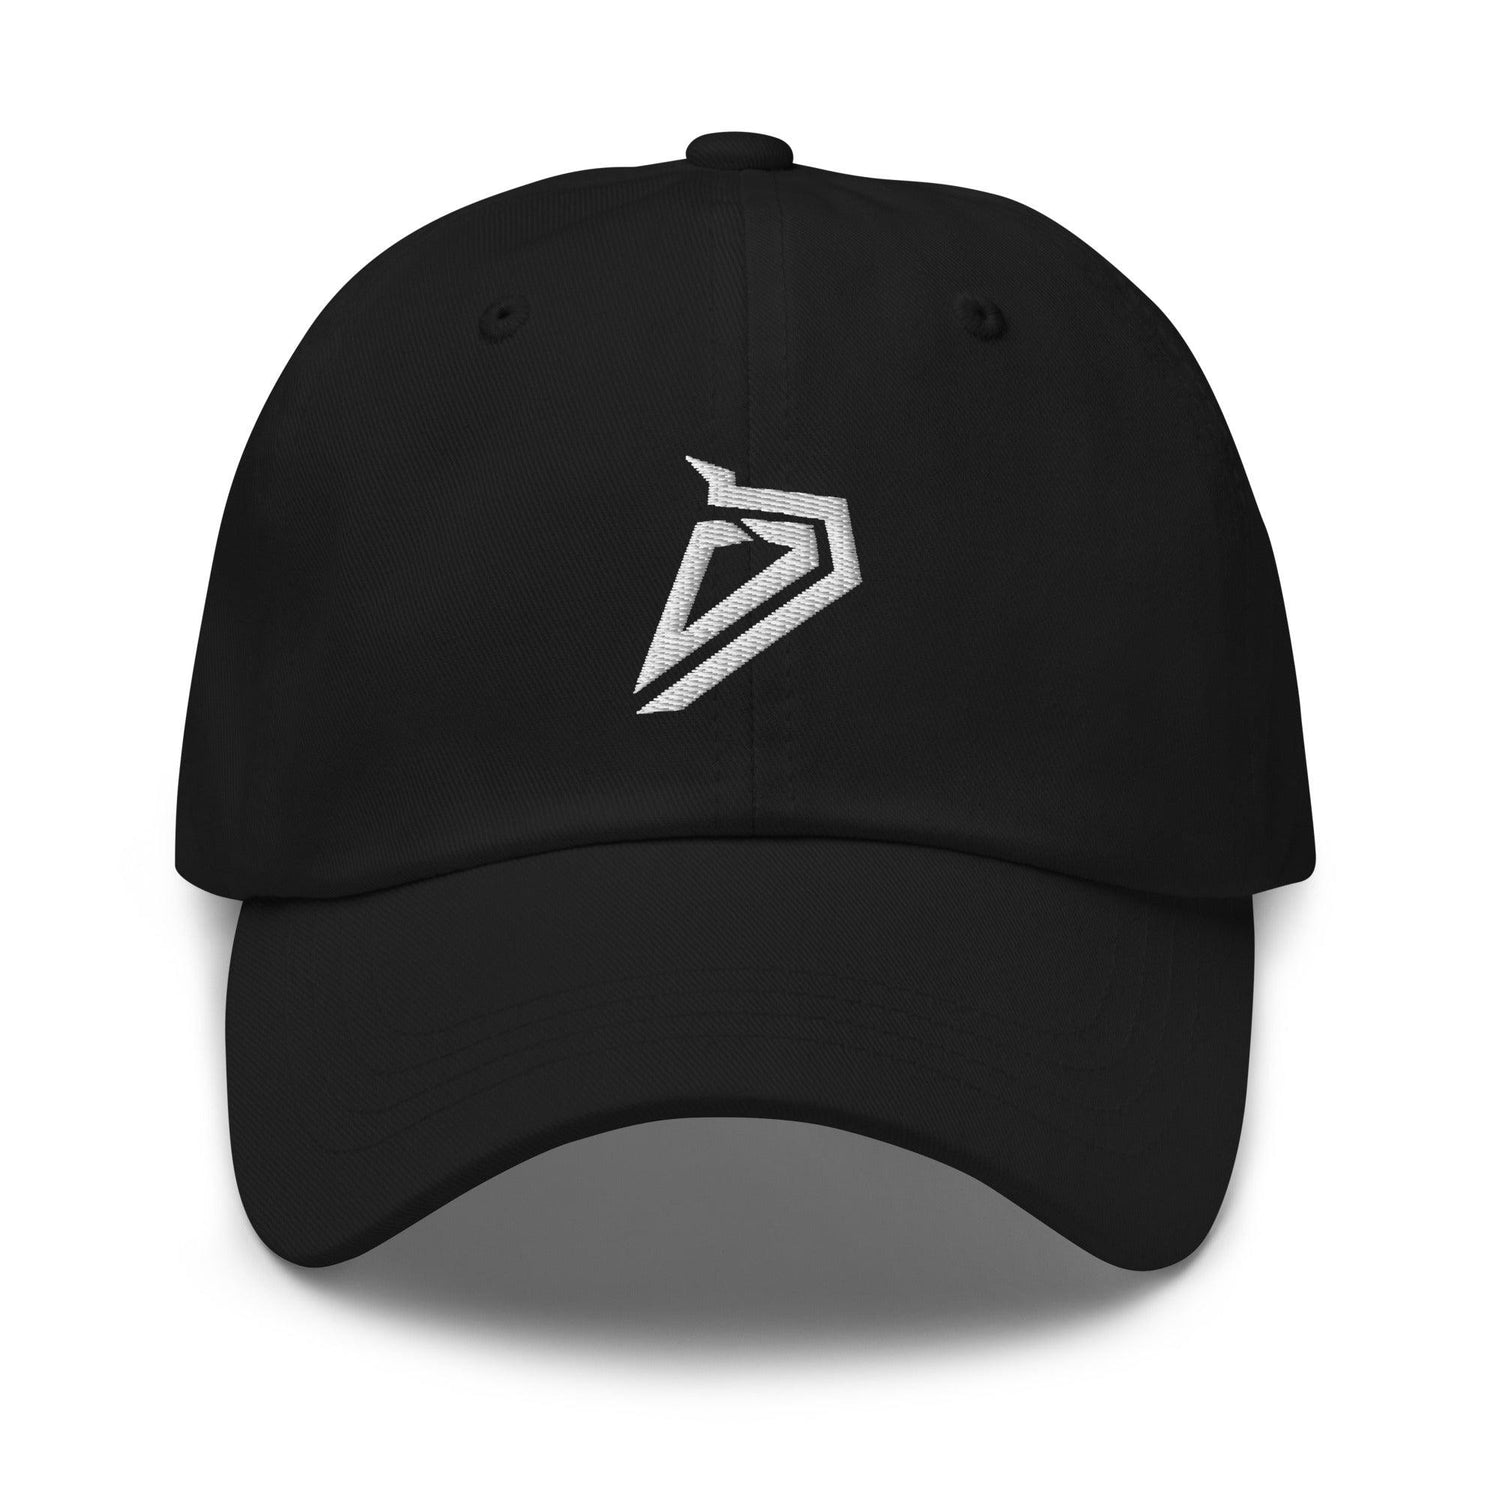 Daewood Davis "Essesntial White" hat - Fan Arch